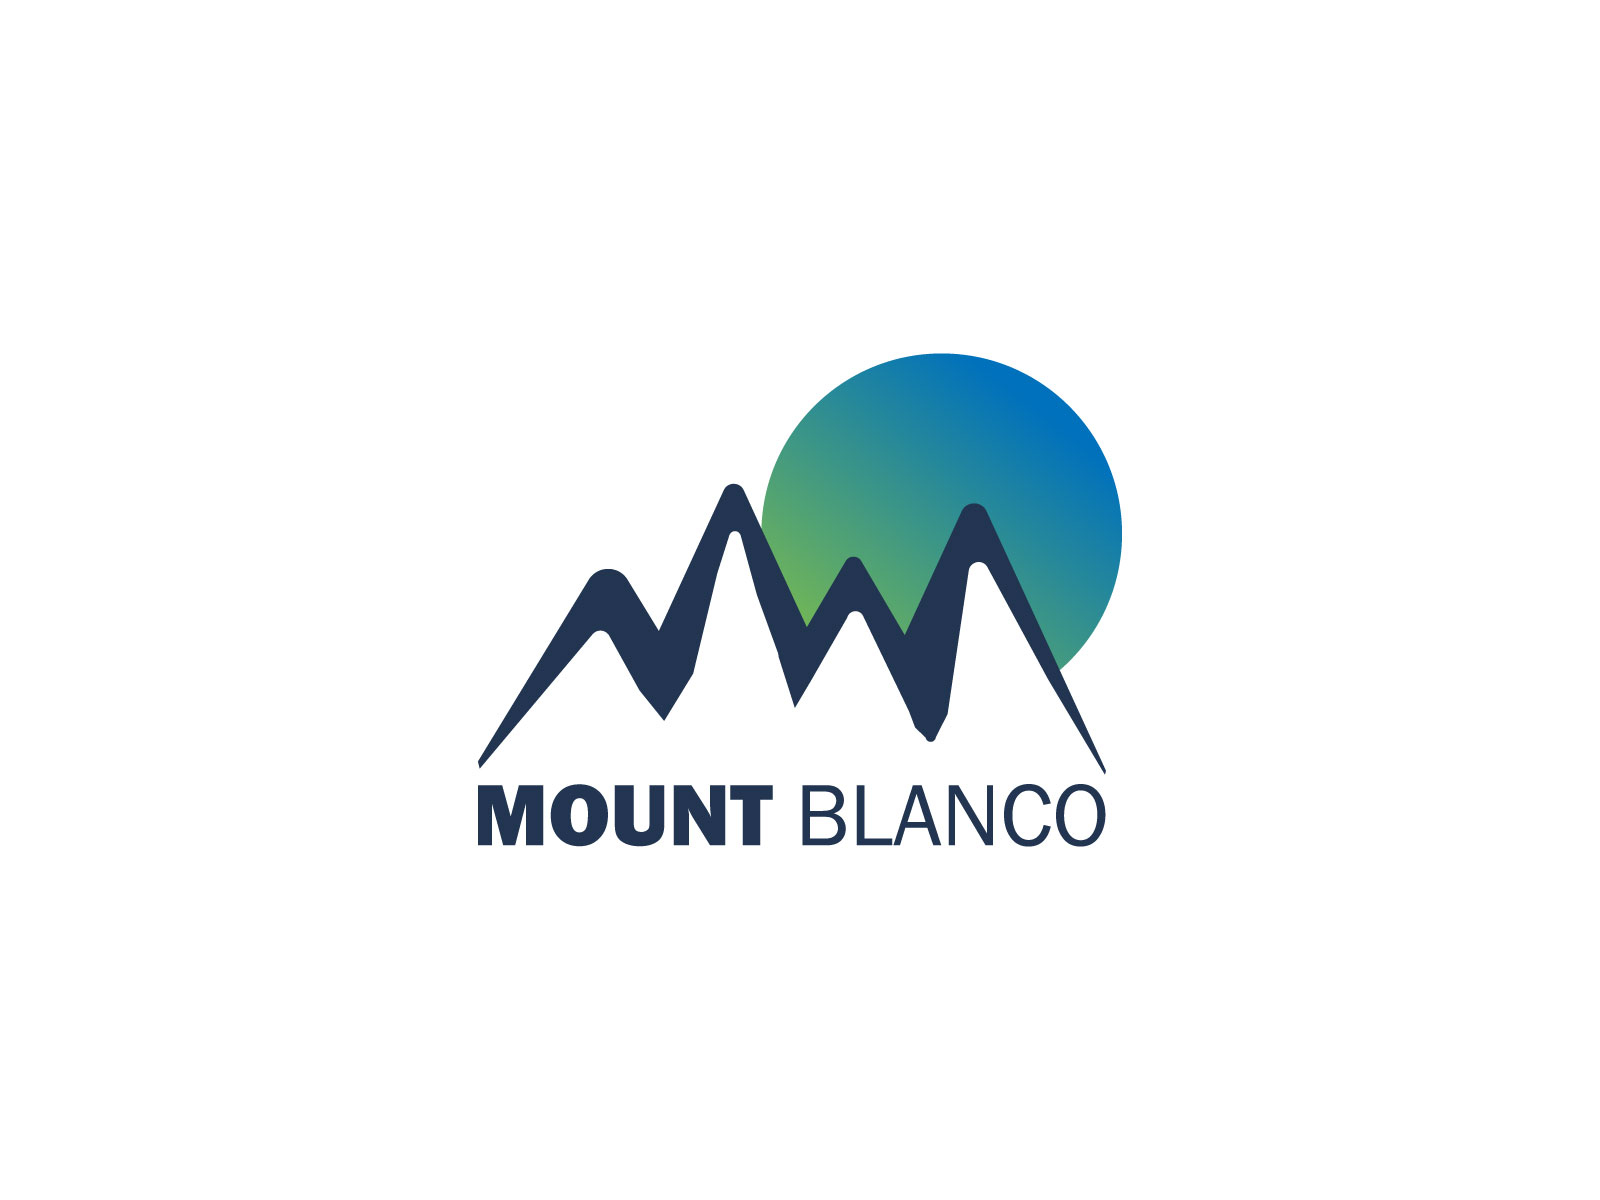 Mount Blanco || Ski Mountain Logo by Mir Arafat Hossain on Dribbble